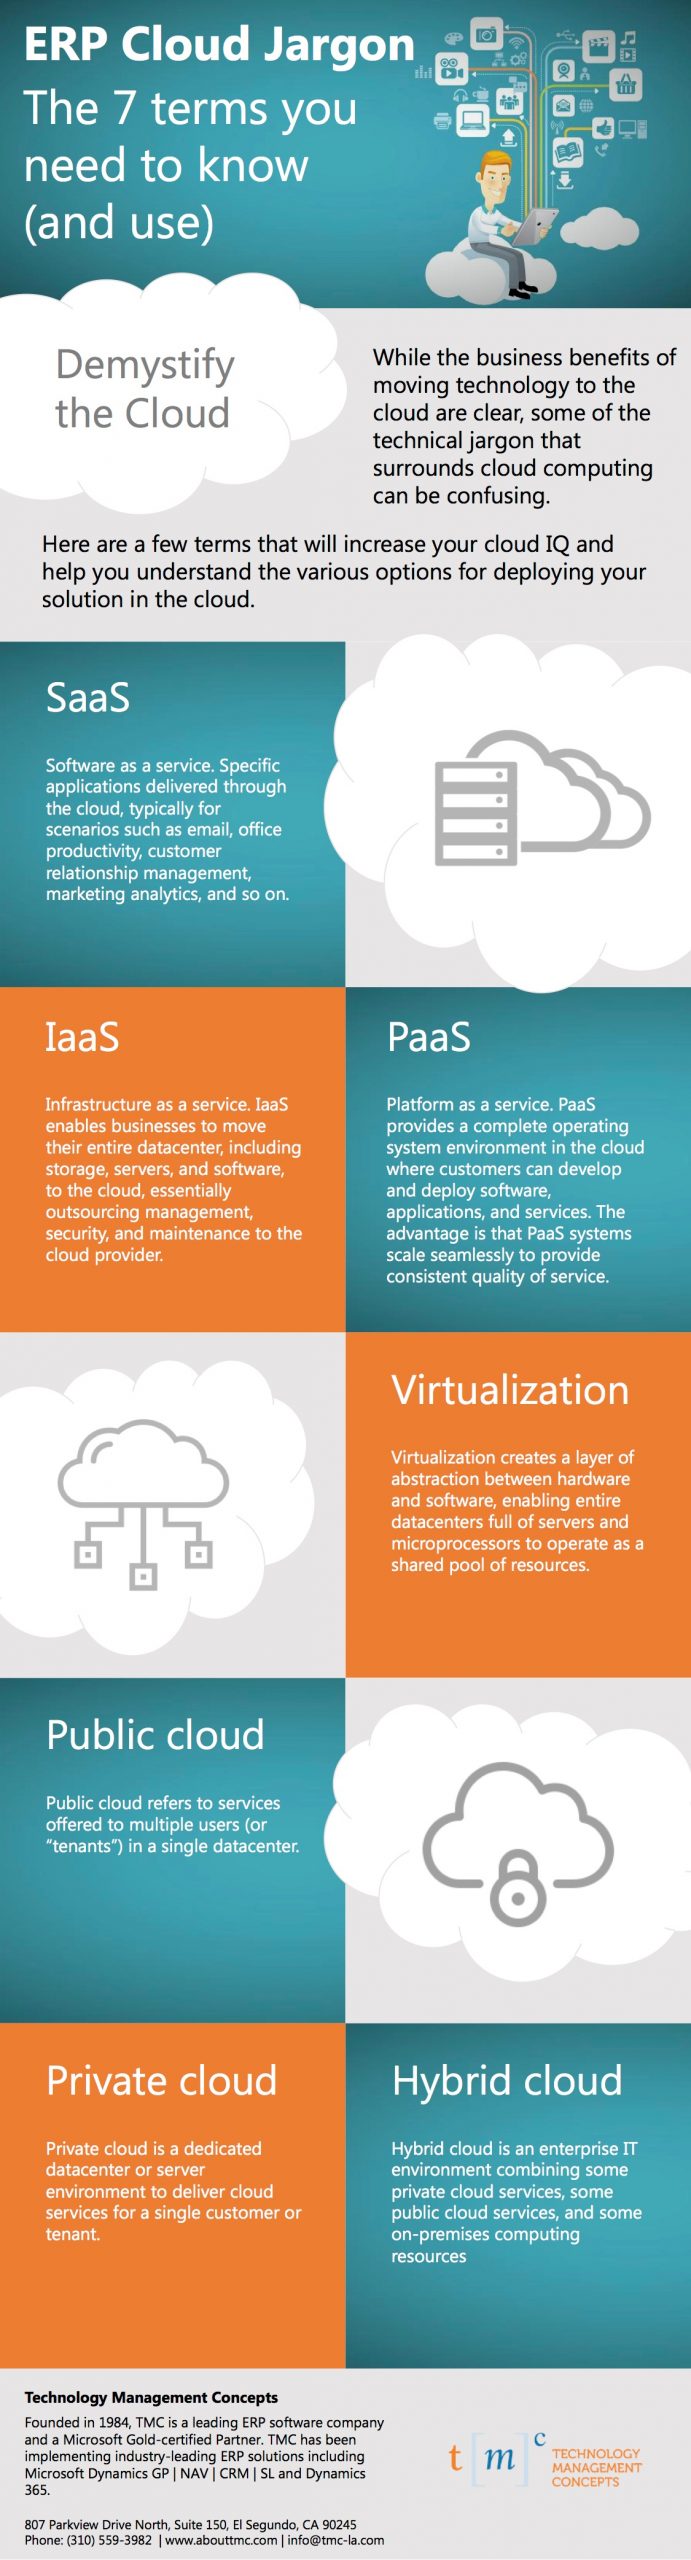 ERP-Cloud-Jargon-infographic.jpg